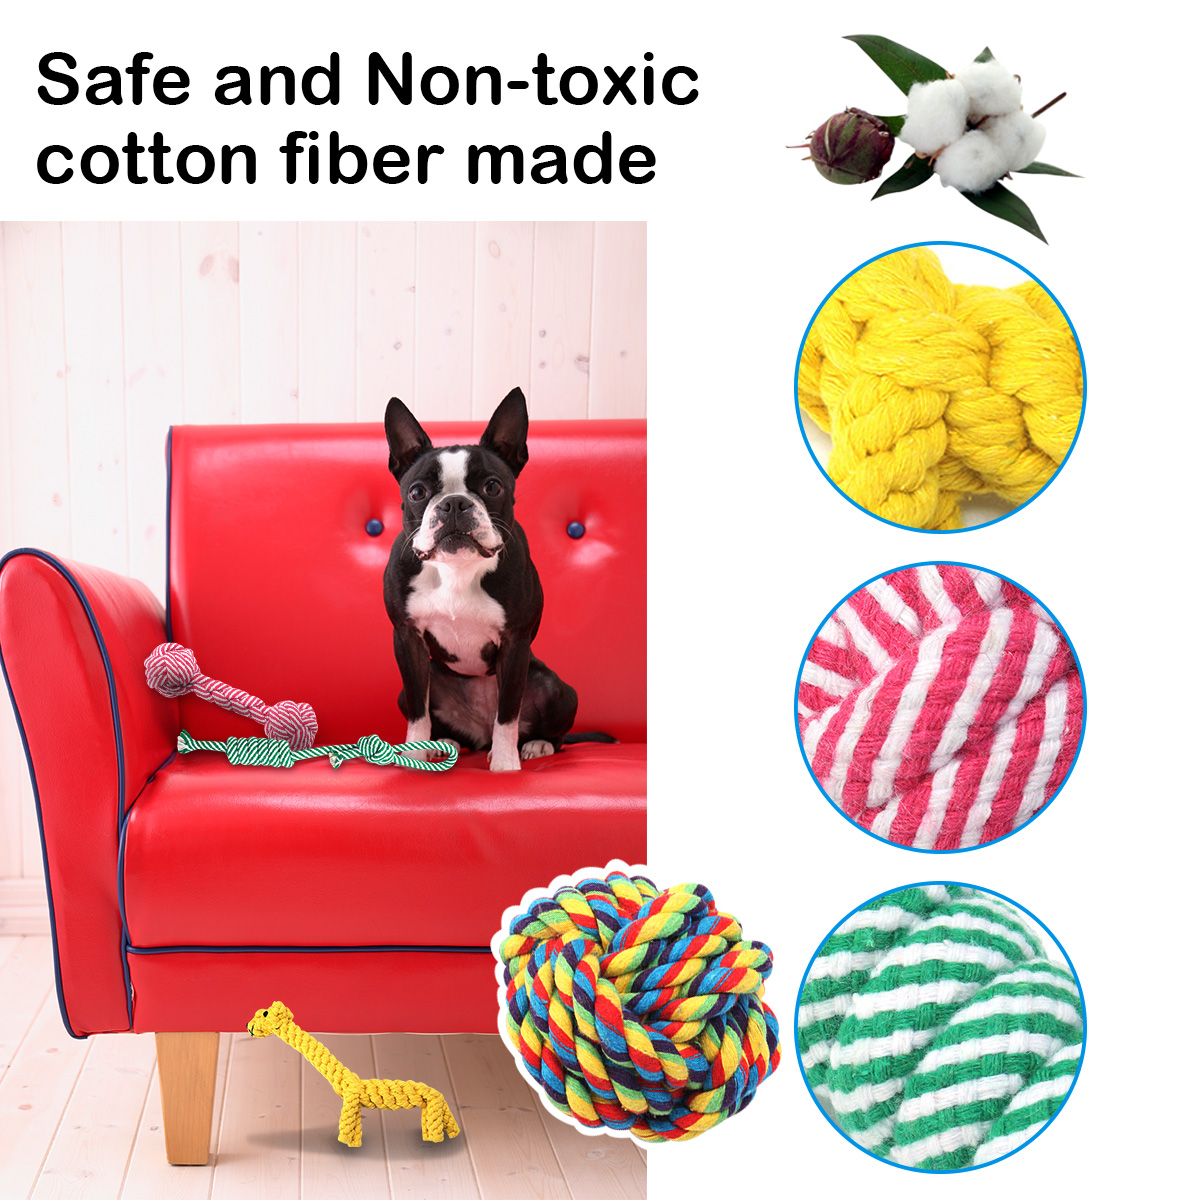 Braided-Cotton-Rope-Bone-Pet-Dog-Interactive-Toys-Dogs-Chews-Bite-Training-Cat-Puppy-Supplies-1304812-2